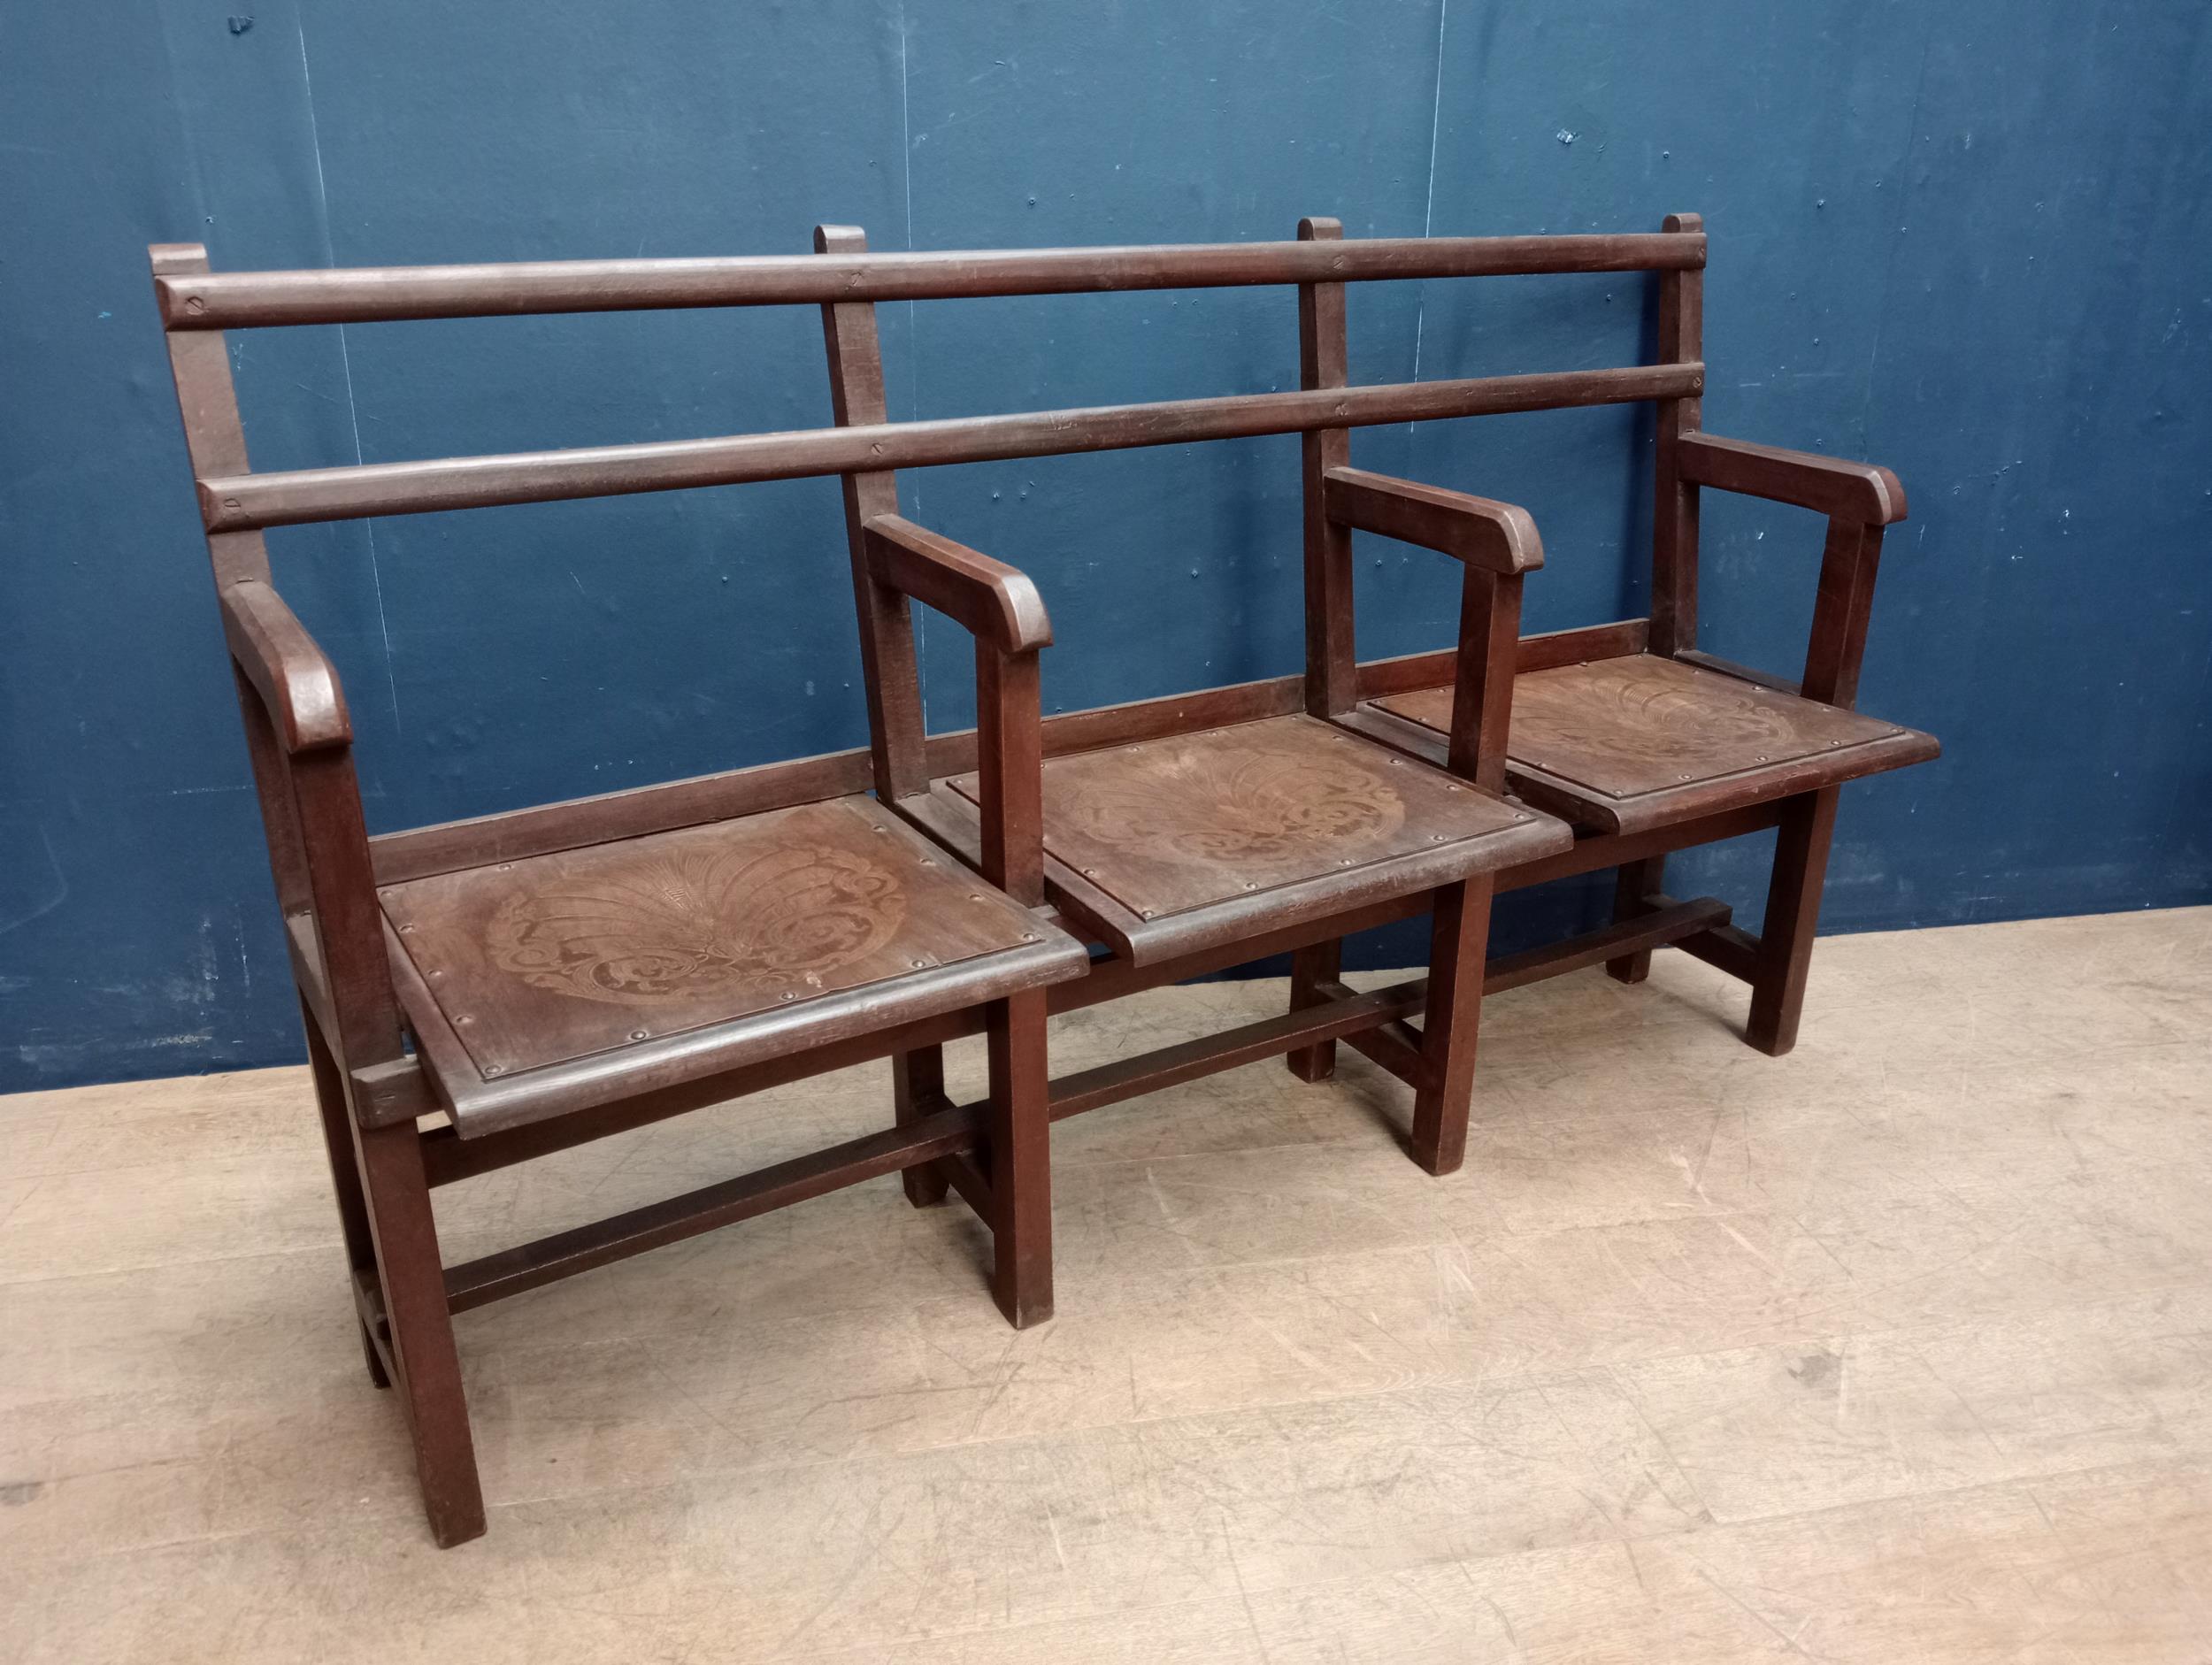 Three seater bench with motif seat {H 91cm x W 152cm x D 41cm }